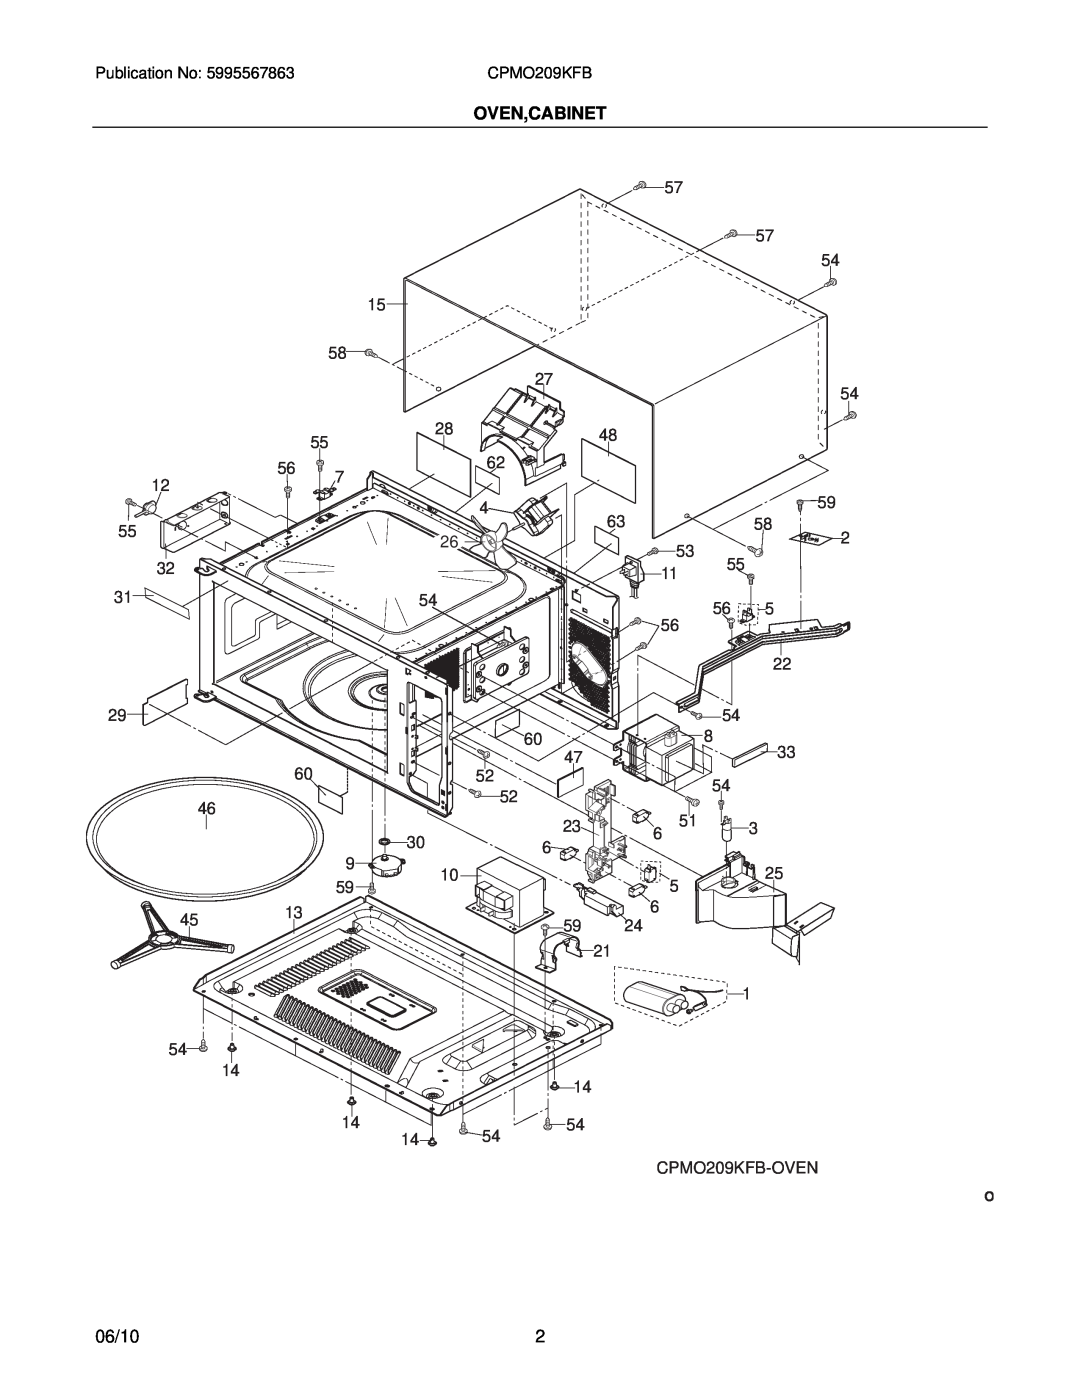 Frigidaire installation instructions 06/10, Oven,Cabinet, CPMO209KFB-OVEN, Publication No 